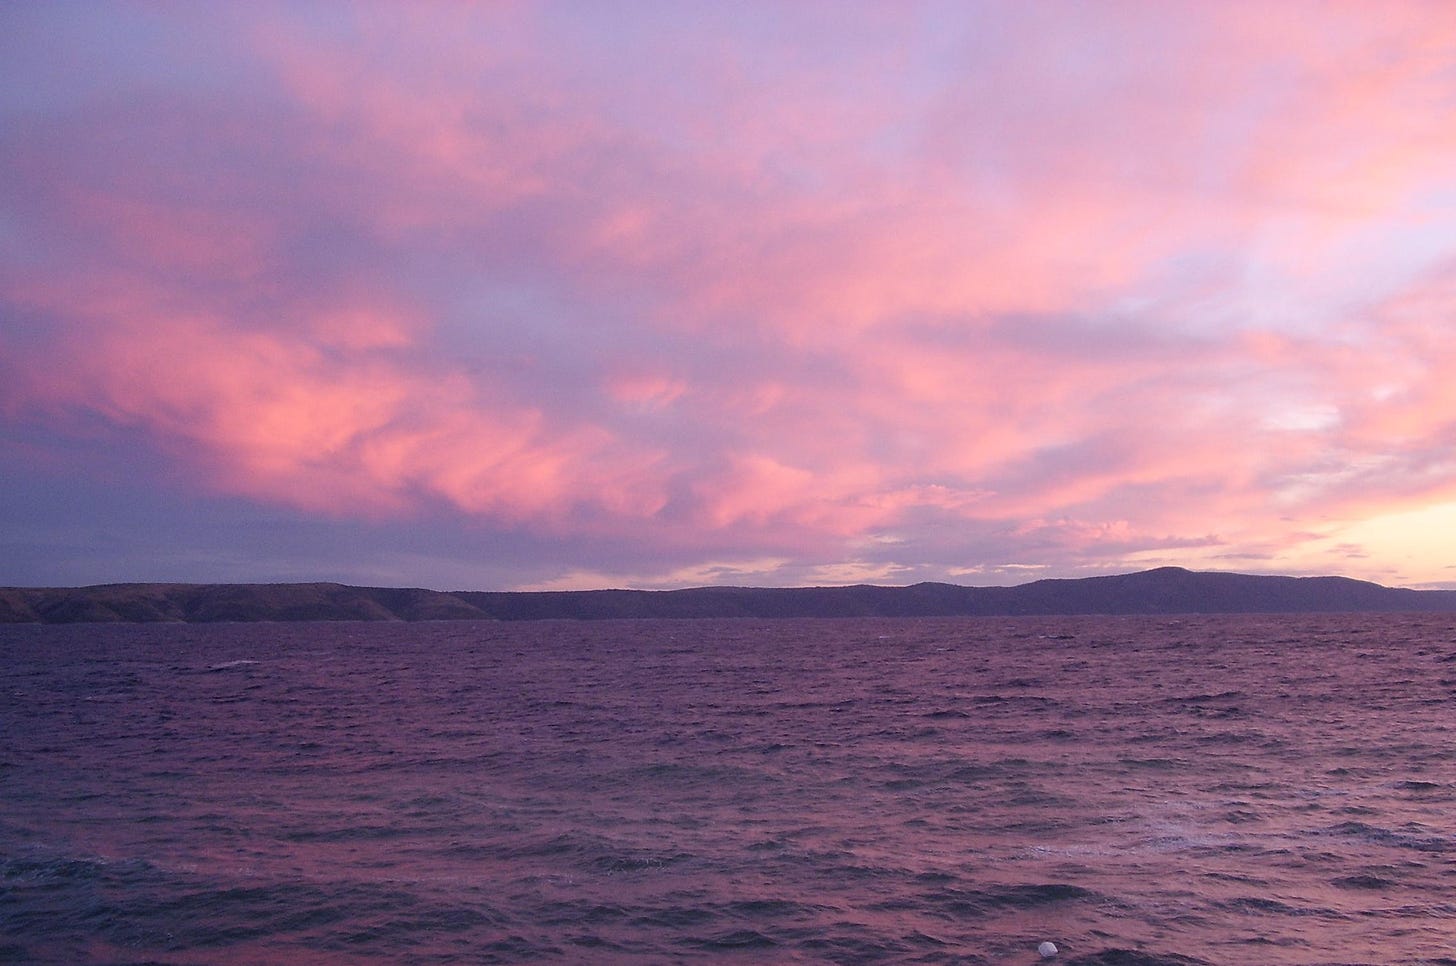 File:Adriatic-pink sunset.JPG - Wikimedia Commons